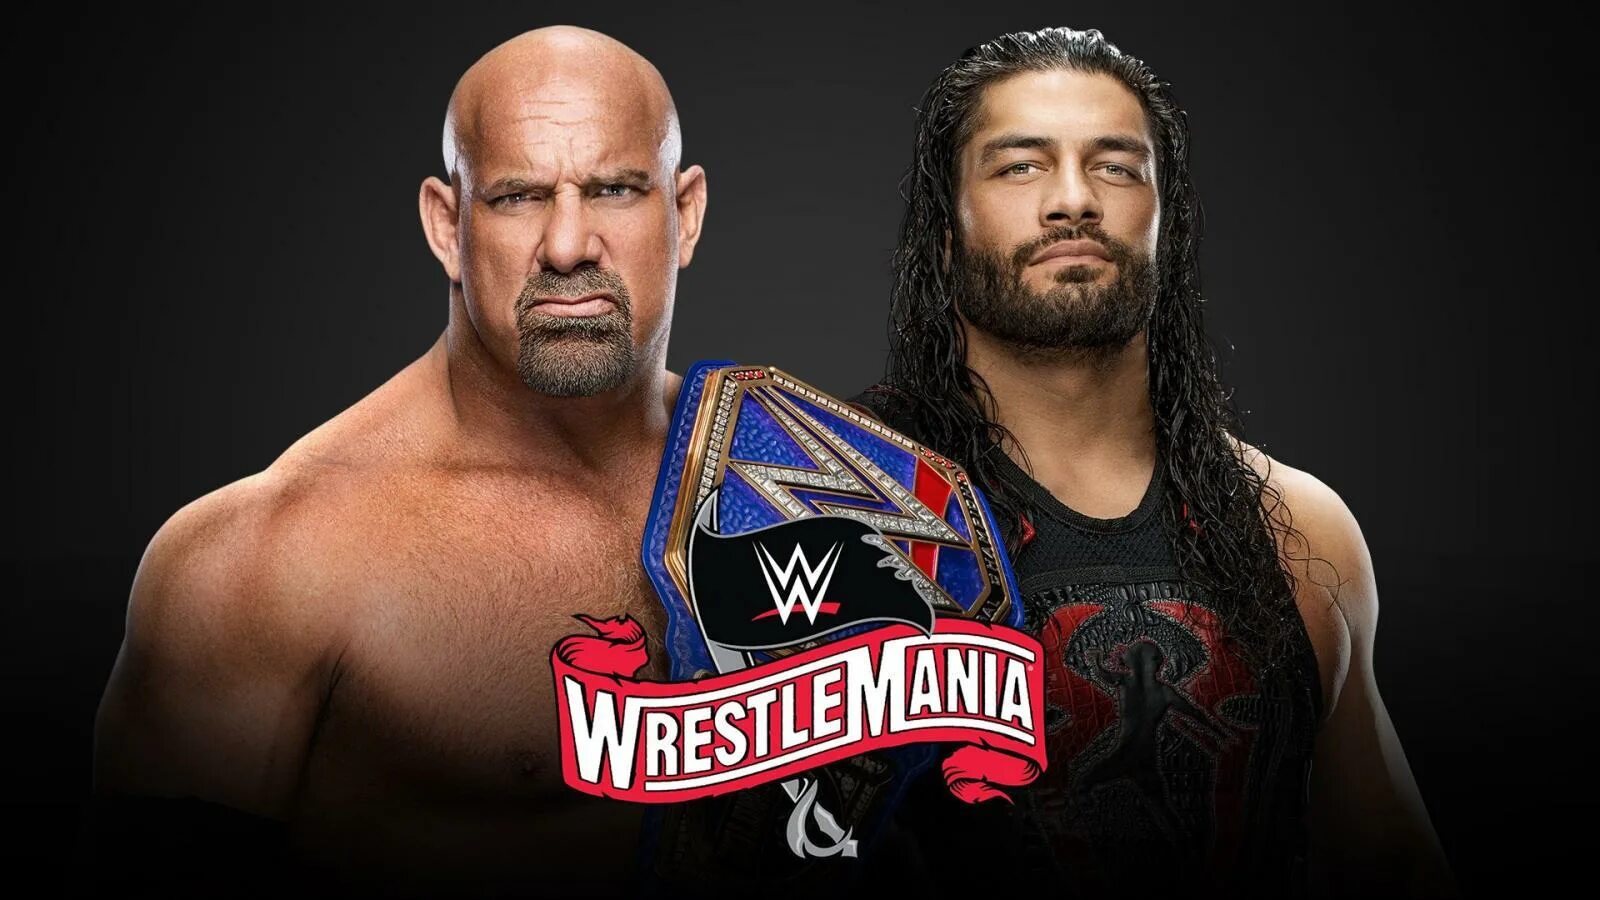 WWE WRESTLEMANIA 36. WWE WRESTLEMANIA 2022. Roman Reigns WRESTLEMANIA 36.